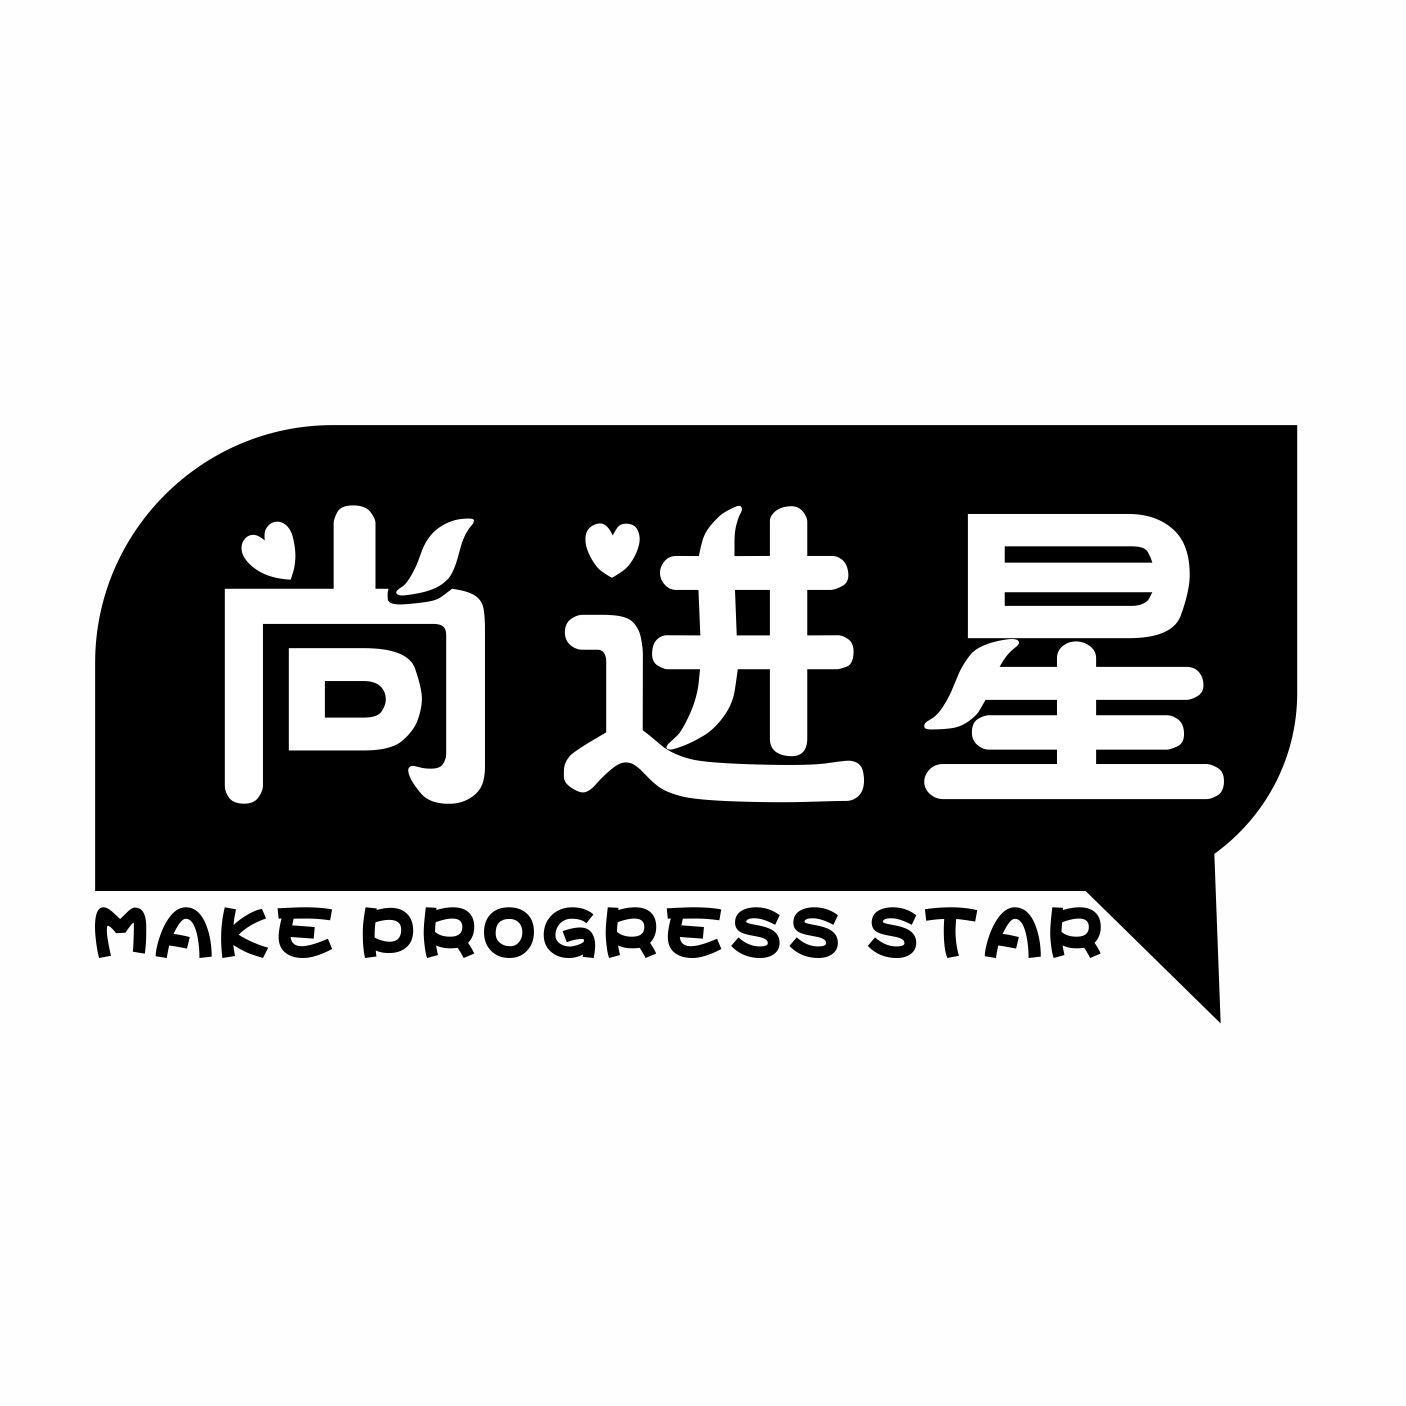 35类-广告销售尚进星 MAKE PROGRESS STAR商标转让